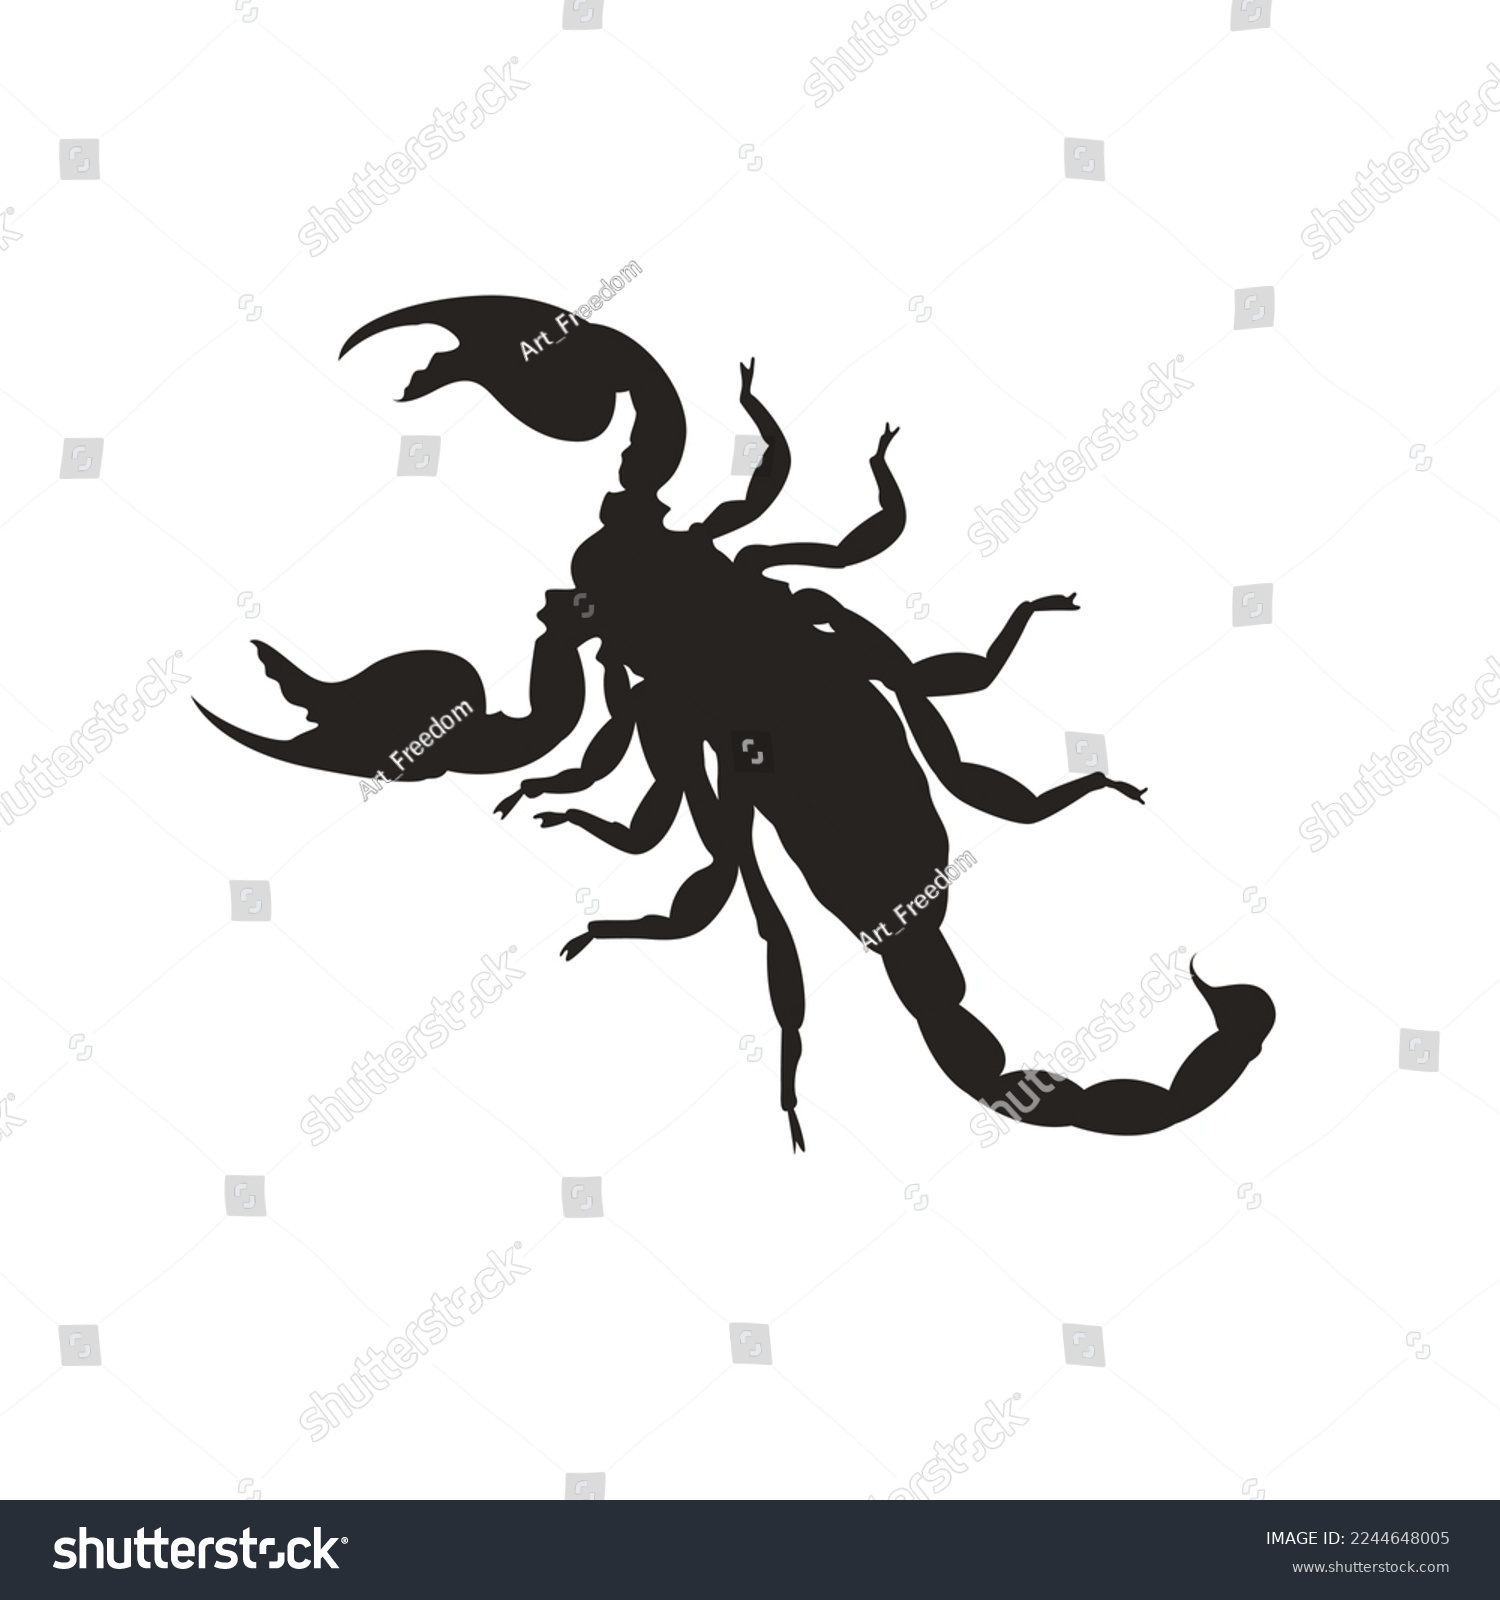 SVG of scorpion silhouette creative design. Vector illustration. svg